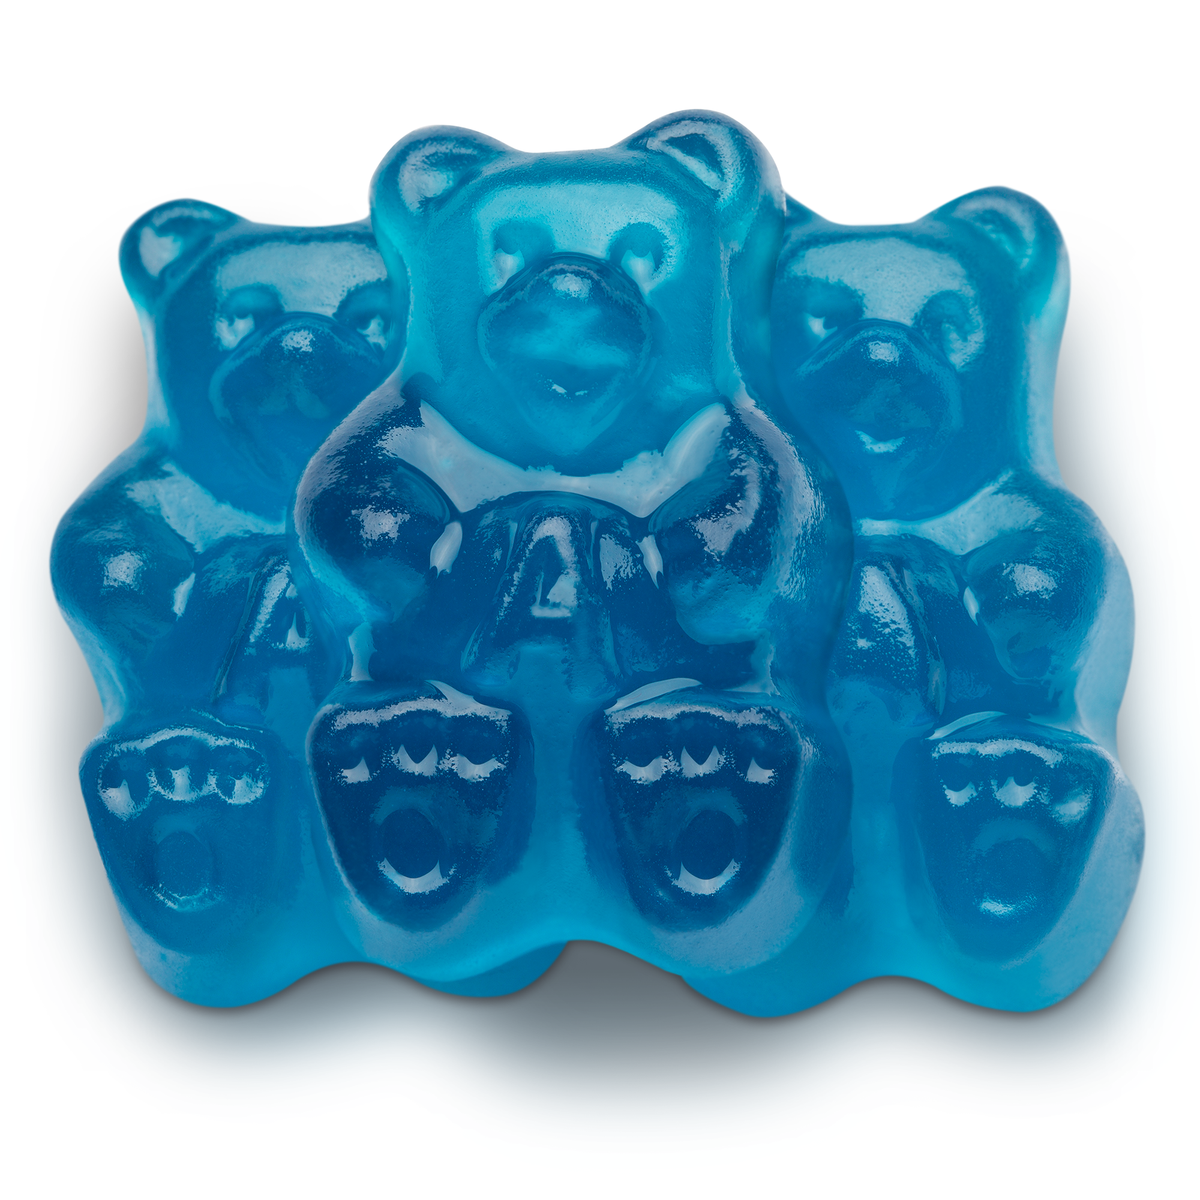 Blue Raspberry Gummi Bears